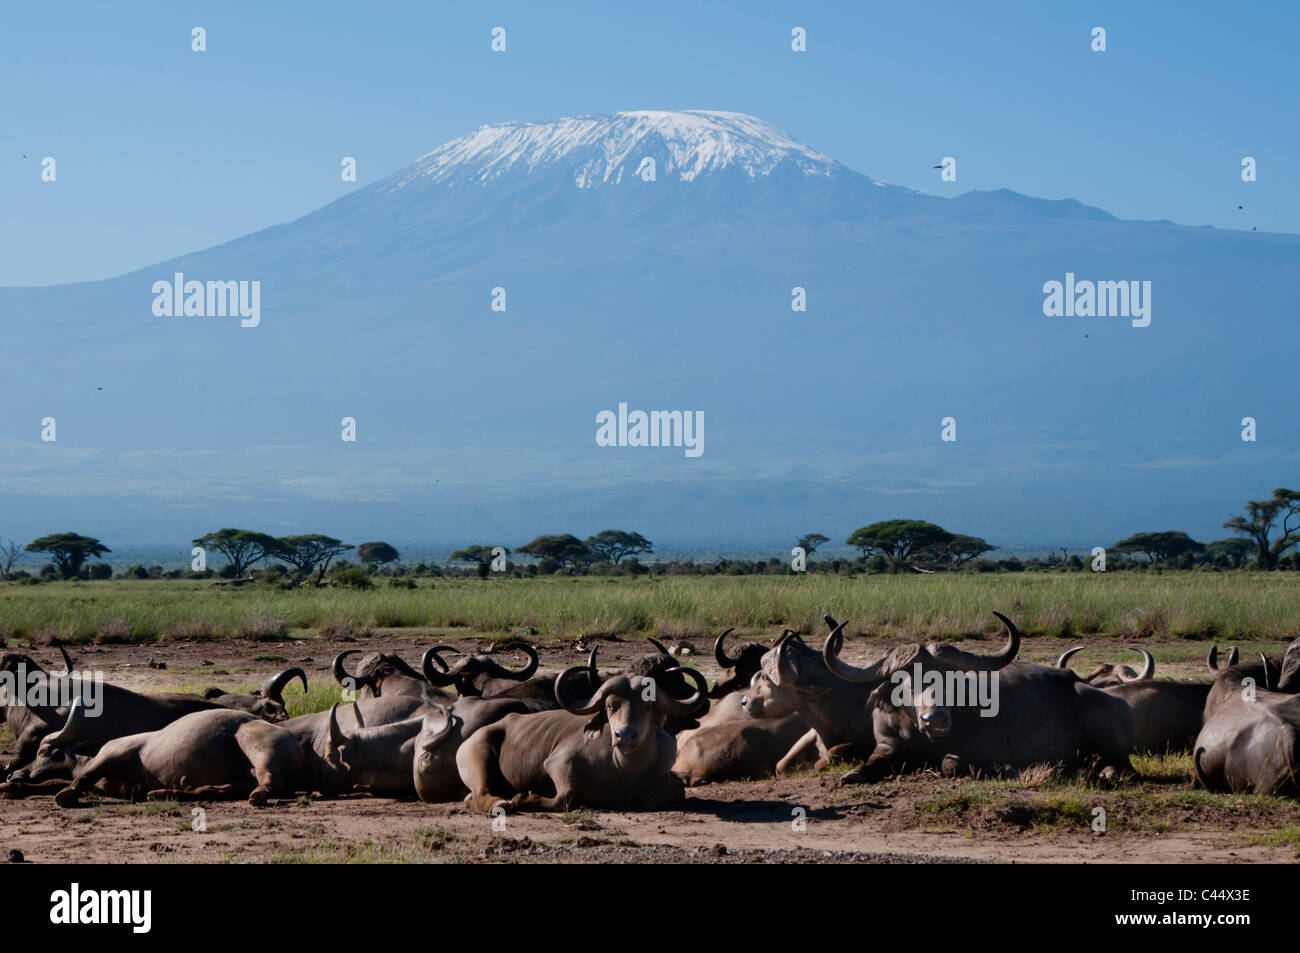 East Africa, Kenya, Tanzania, Kilimanjaro, Amboseli, volcano, mountain, symmetry, snow, Cape Buffalo, wildlife, game reserve, pa Stock Photo